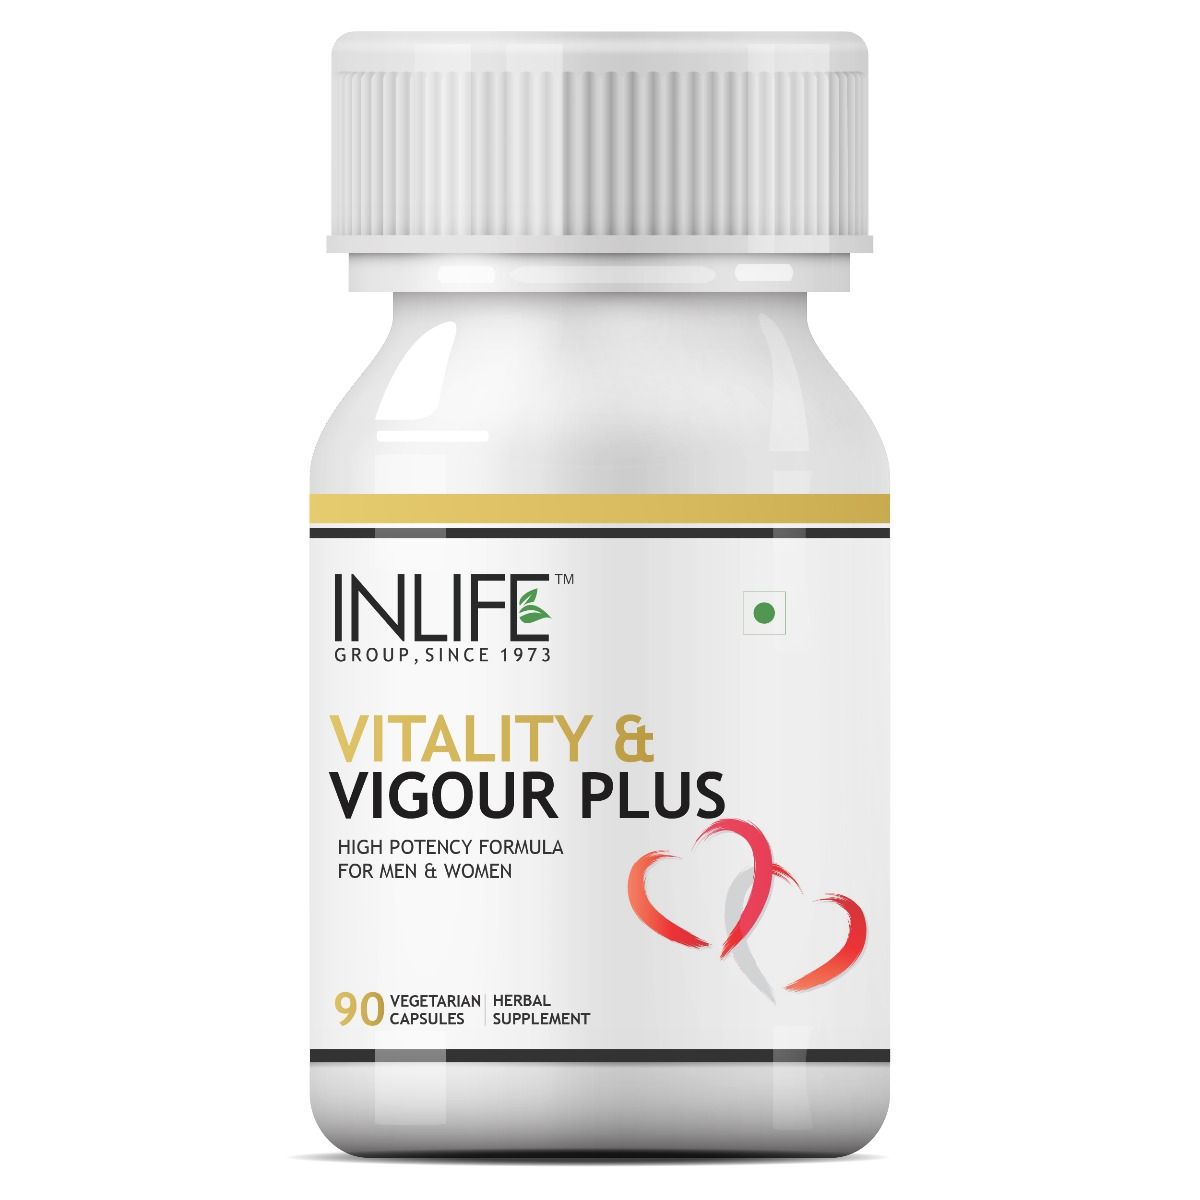 Buy Inlife Vitality & Vigour Plus, 90 Capsules Online